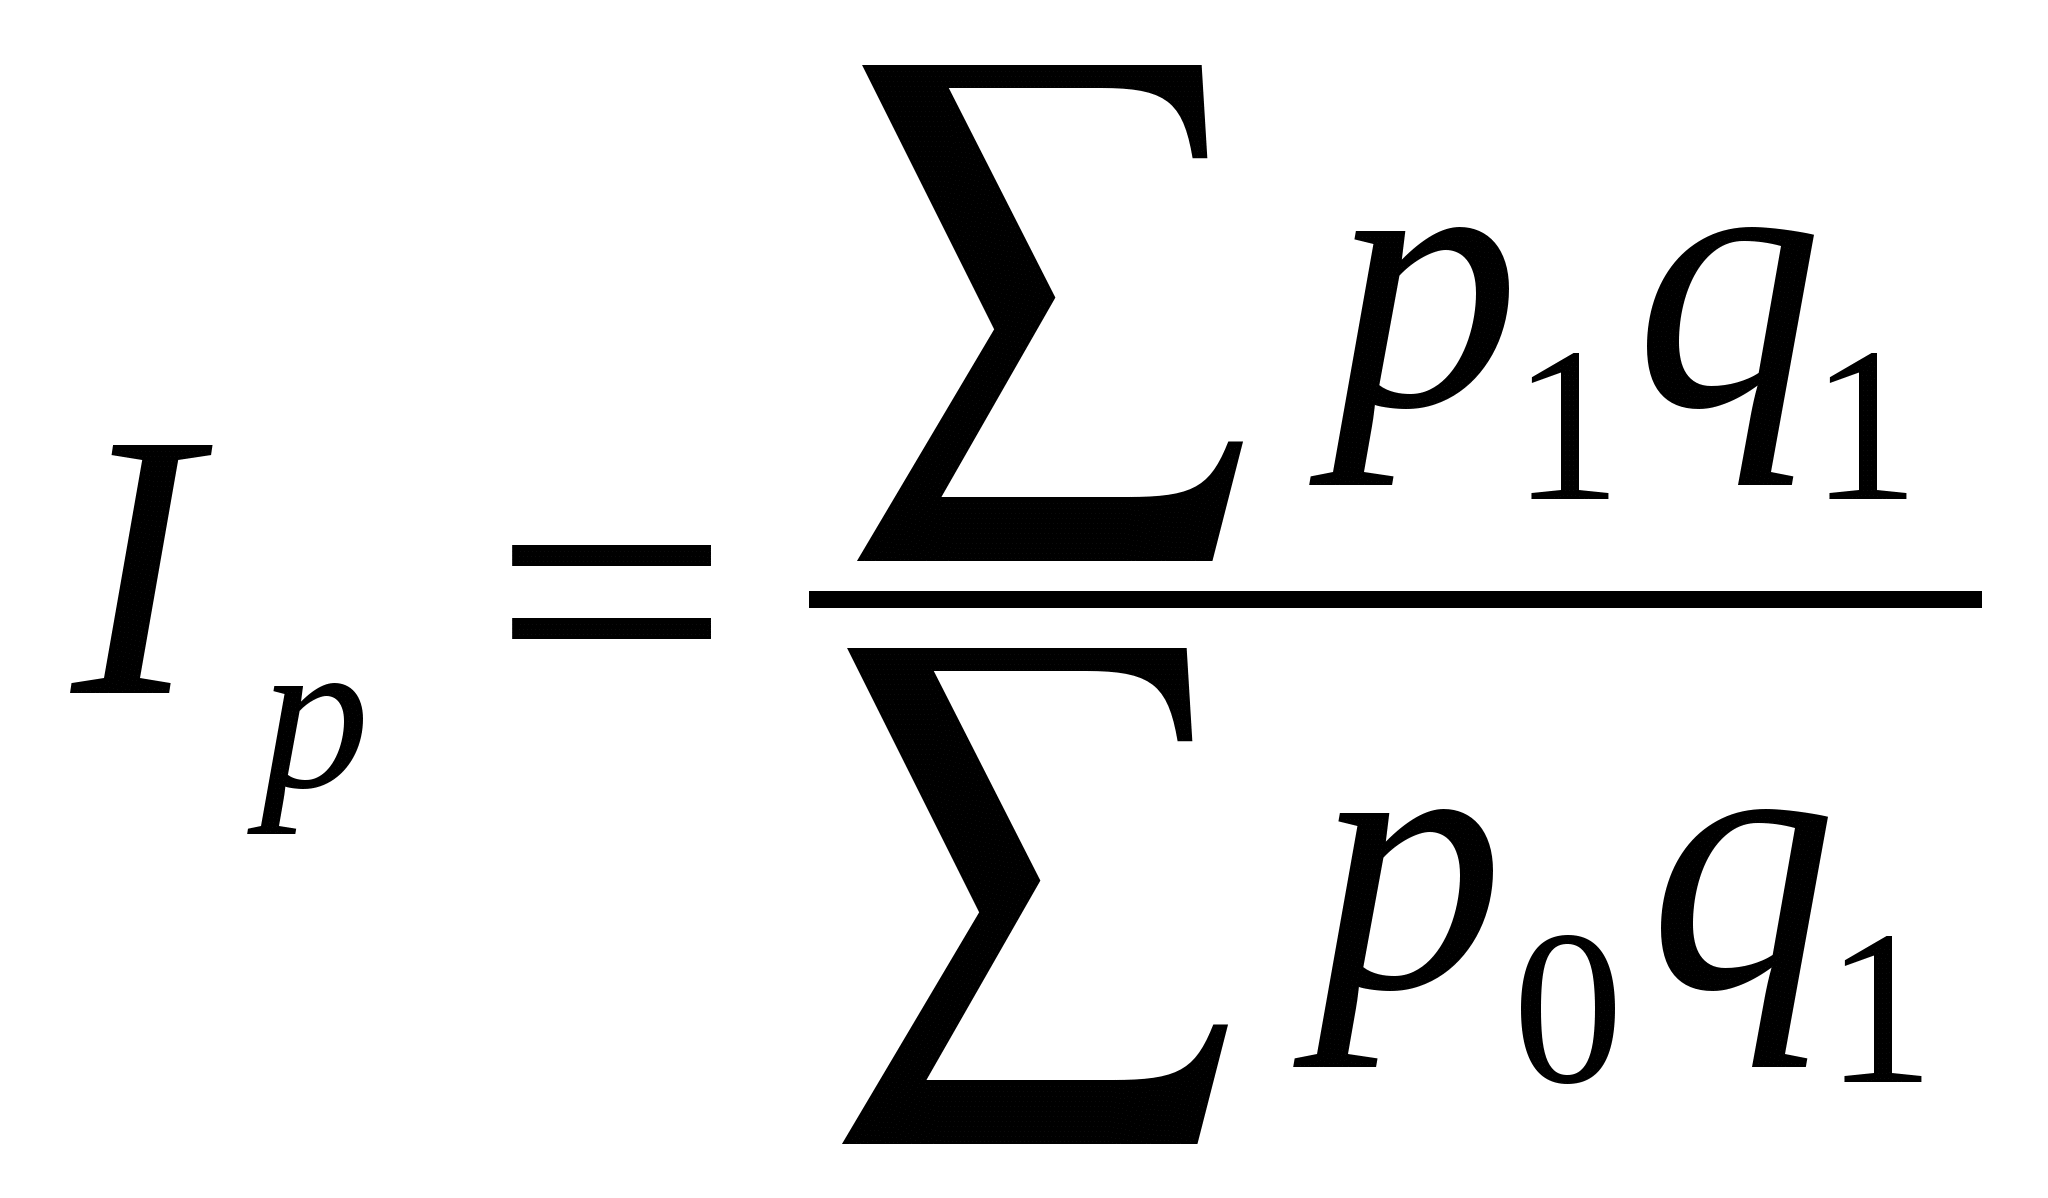 P p p po 0. Индекс физического объема Пааше. Ценовой индекс Пааше. Индекс физического объема Ласпейреса. Формула Пааше.